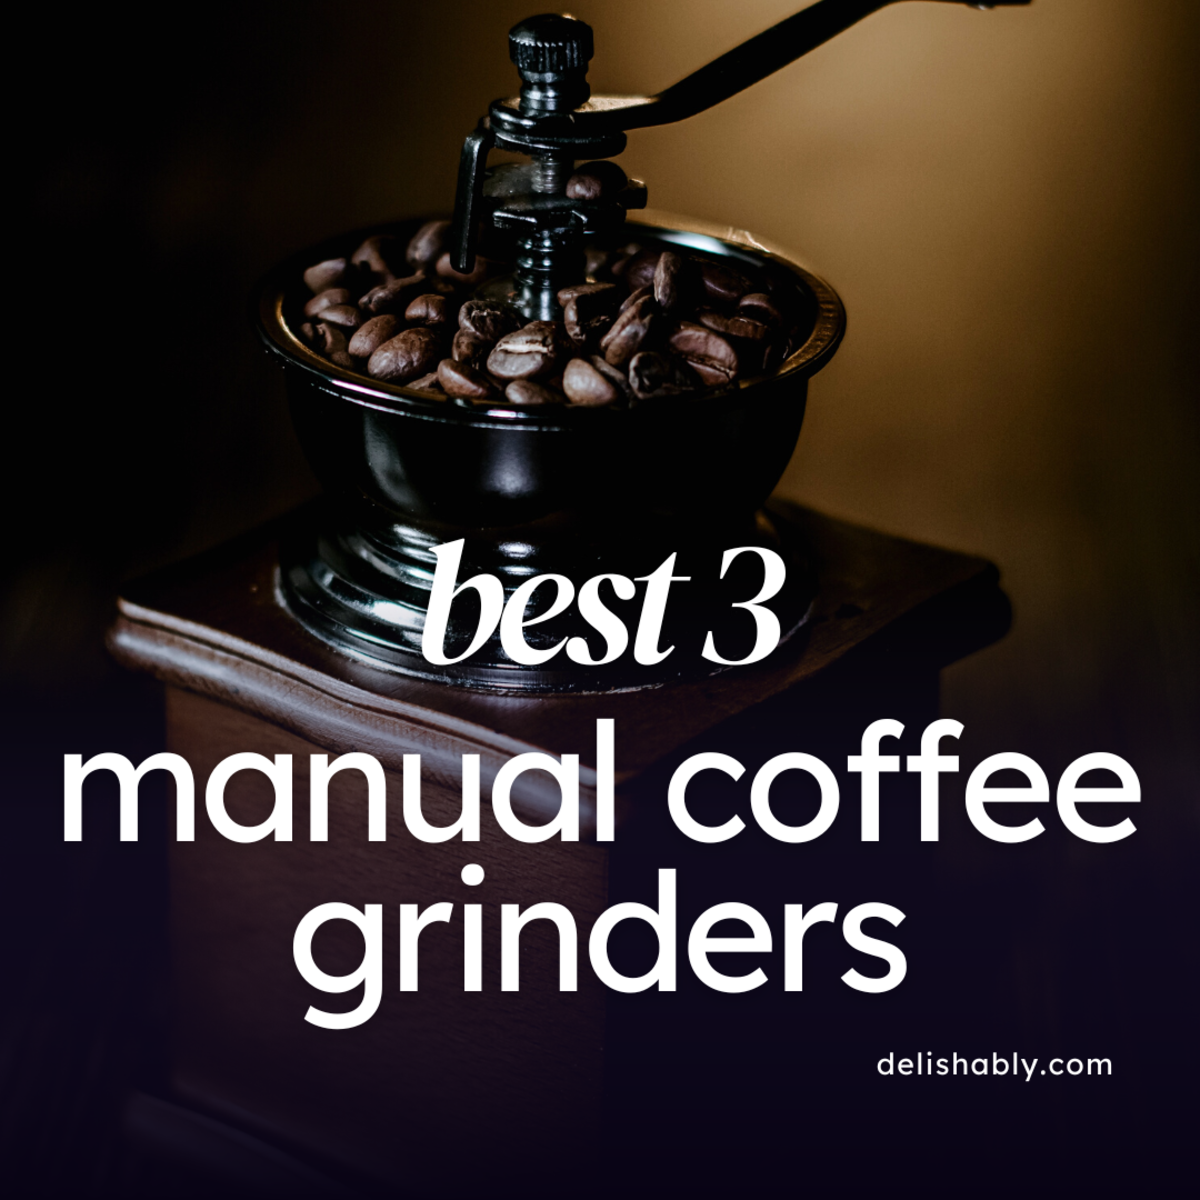 Manual Coffee Machine Retro Hand Crank Solid Wood Coffee Grinder Household  Grinder Coffee Grinder